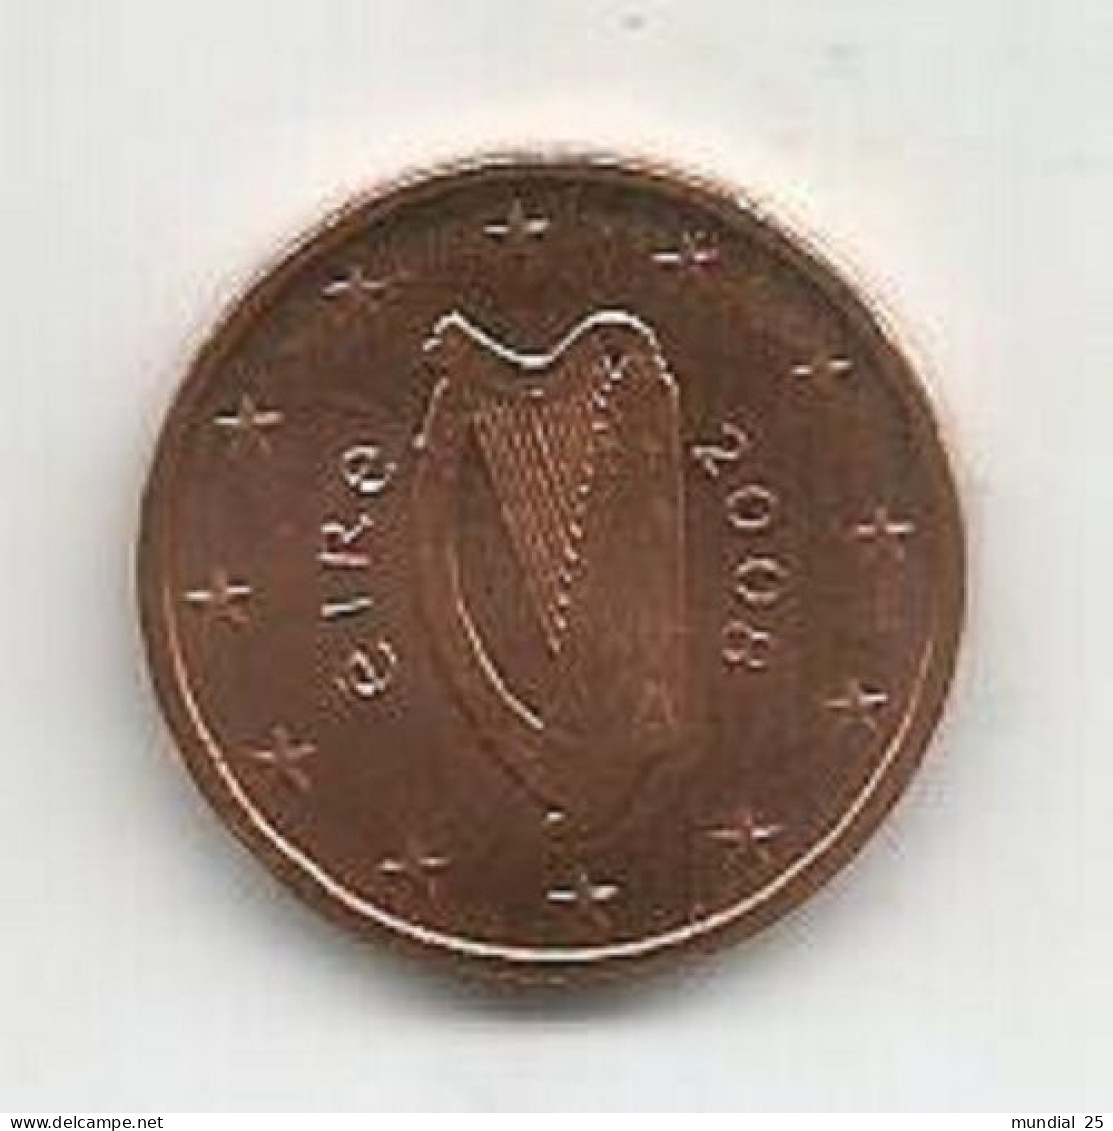 IRELAND 2 EURO CENT 2008 - Irland